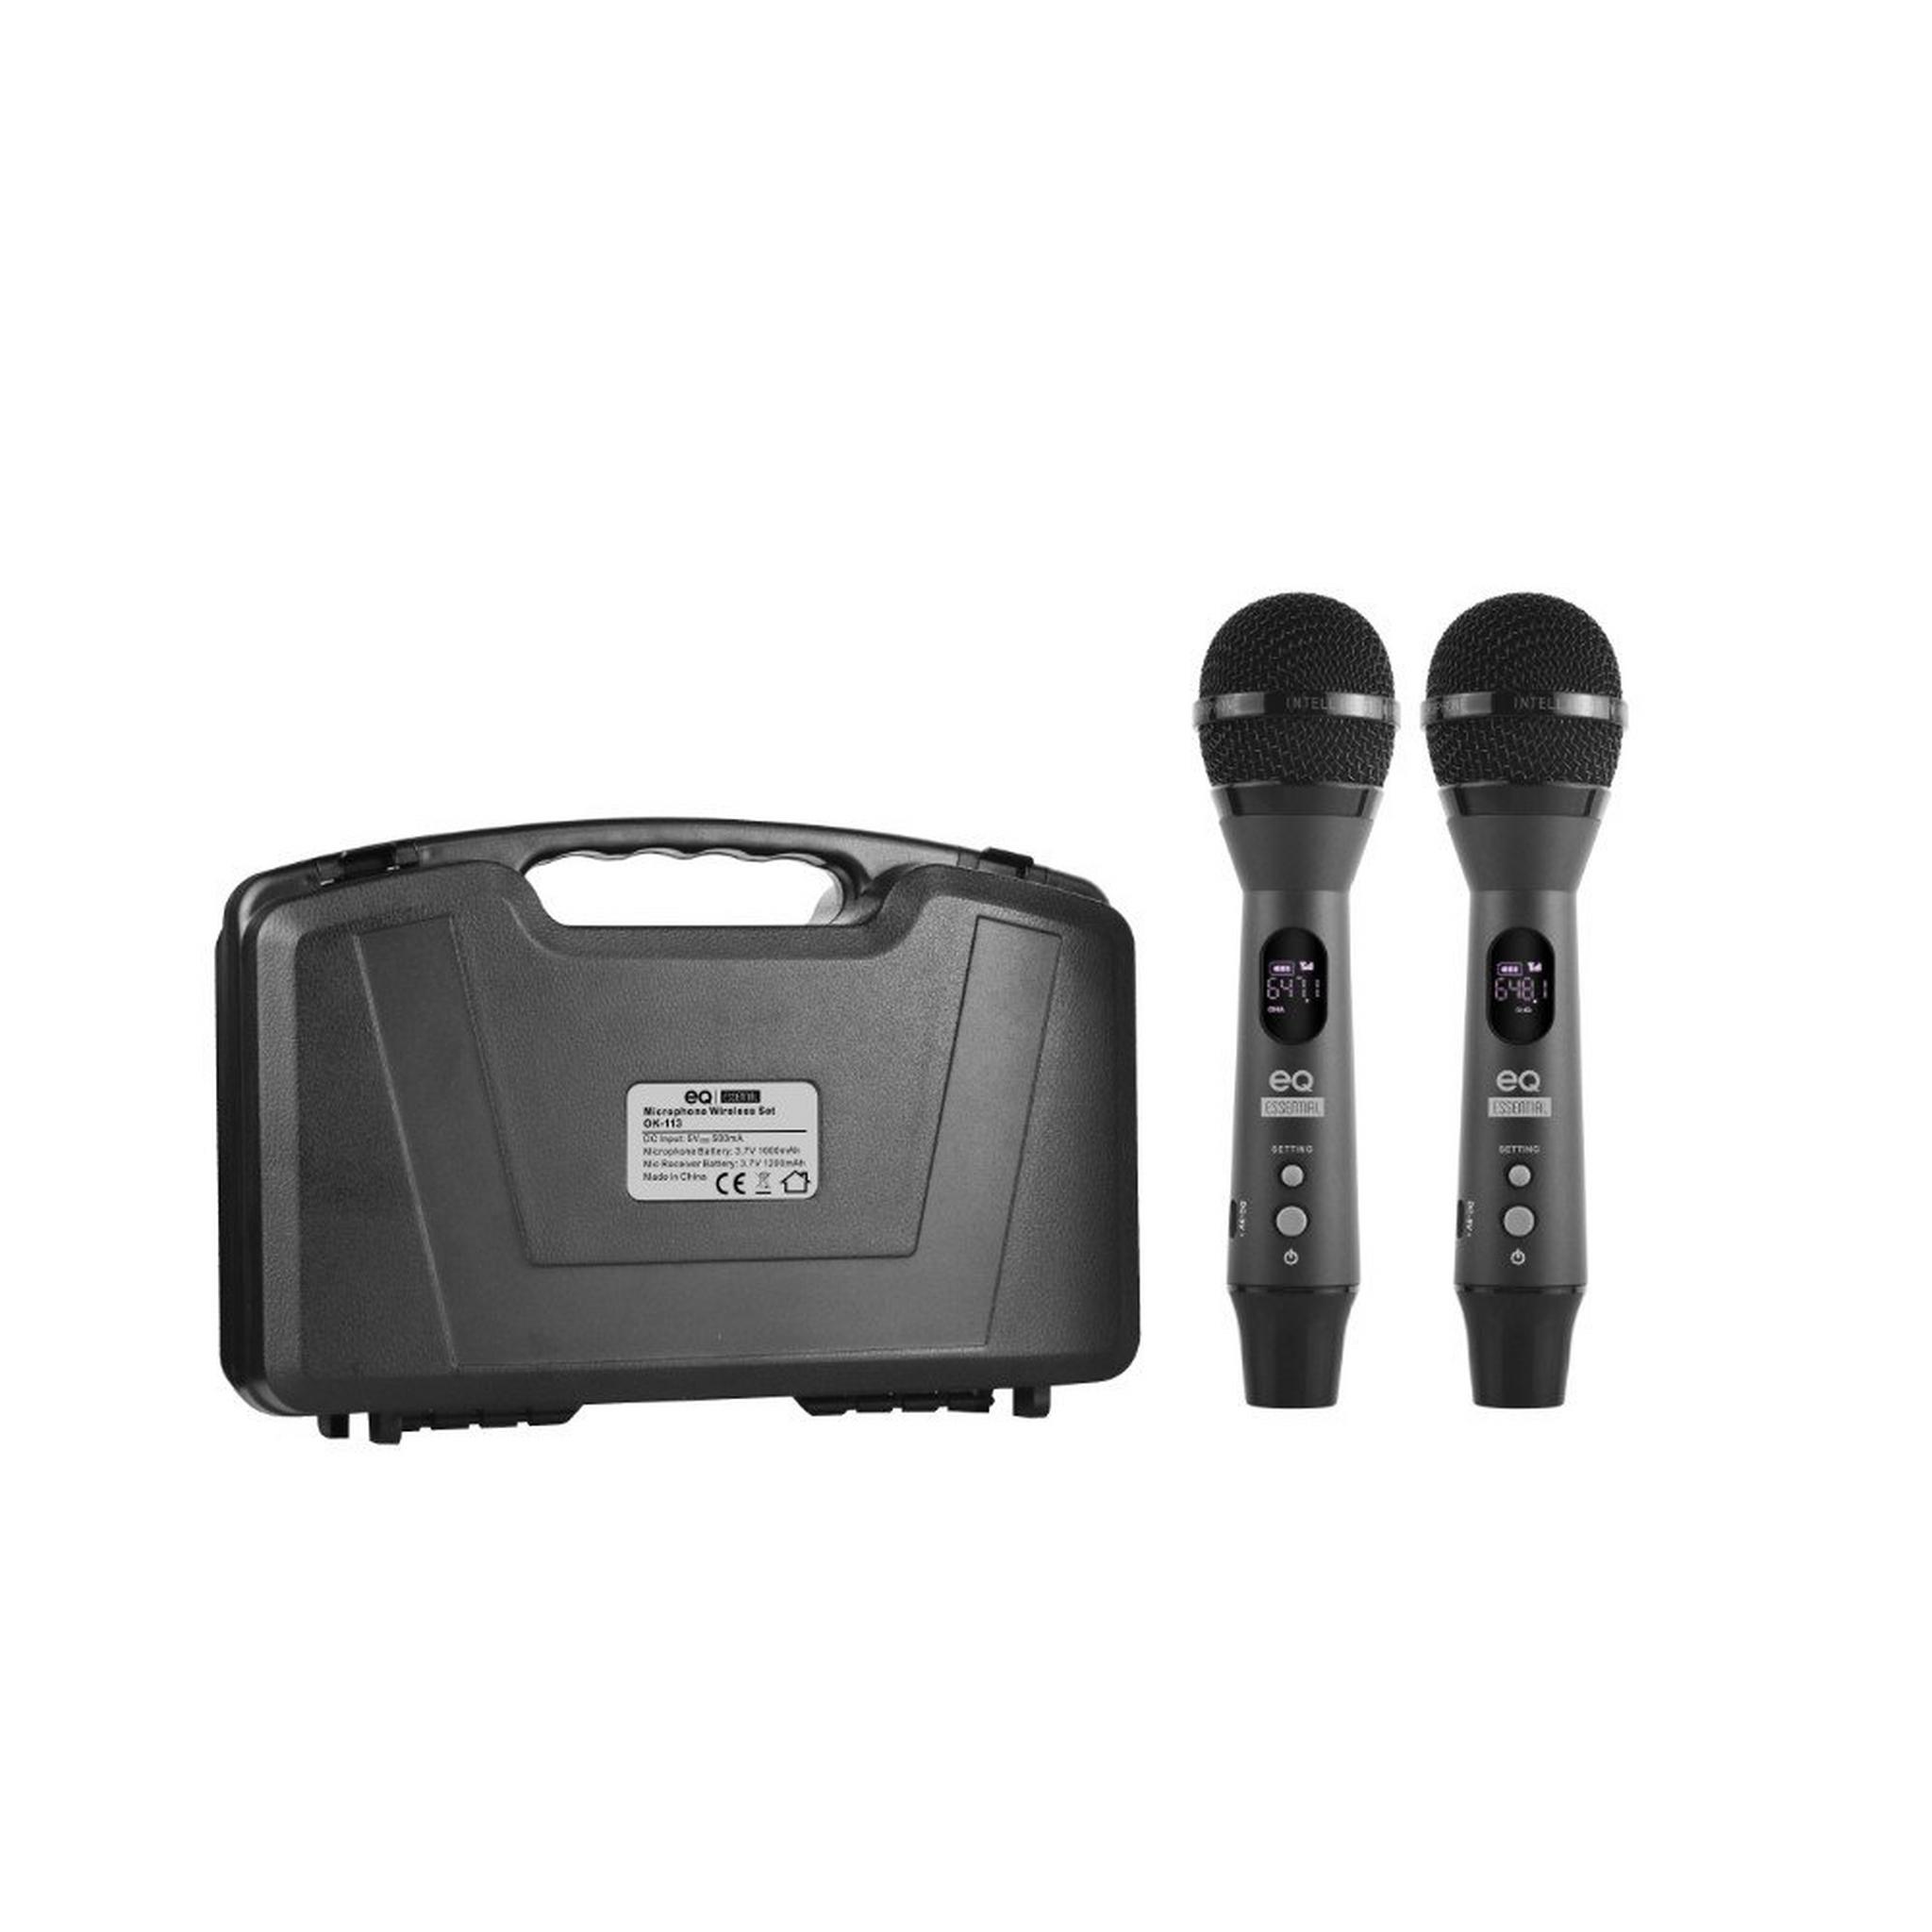 EQ Wireless Microphone Set, 2x UHF Microphones and 1x Signal Receiver, OK-113 - Black